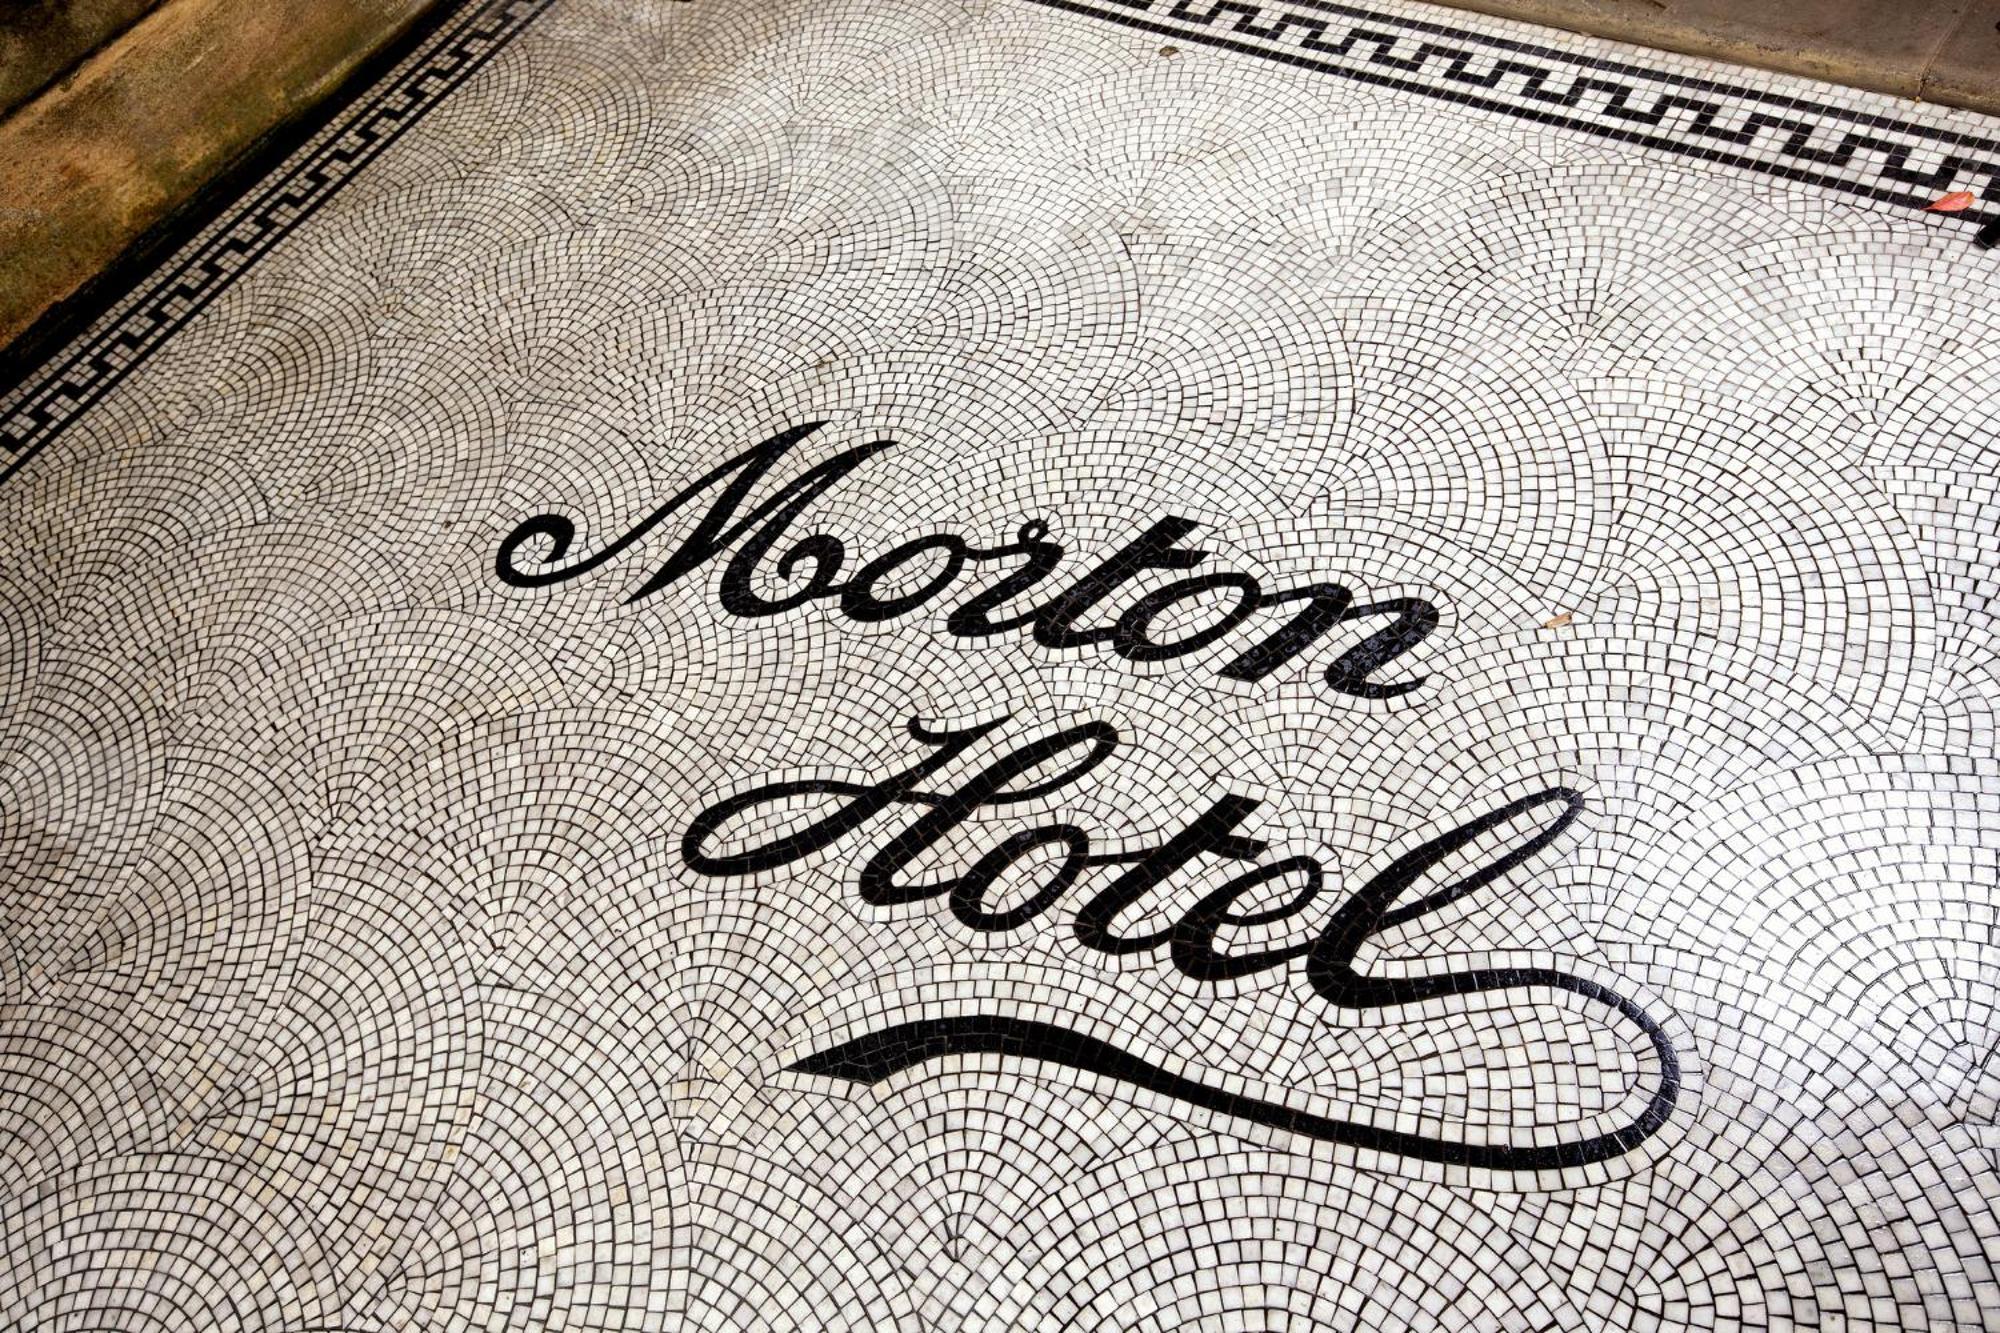 Morton Hotel 伦敦 外观 照片